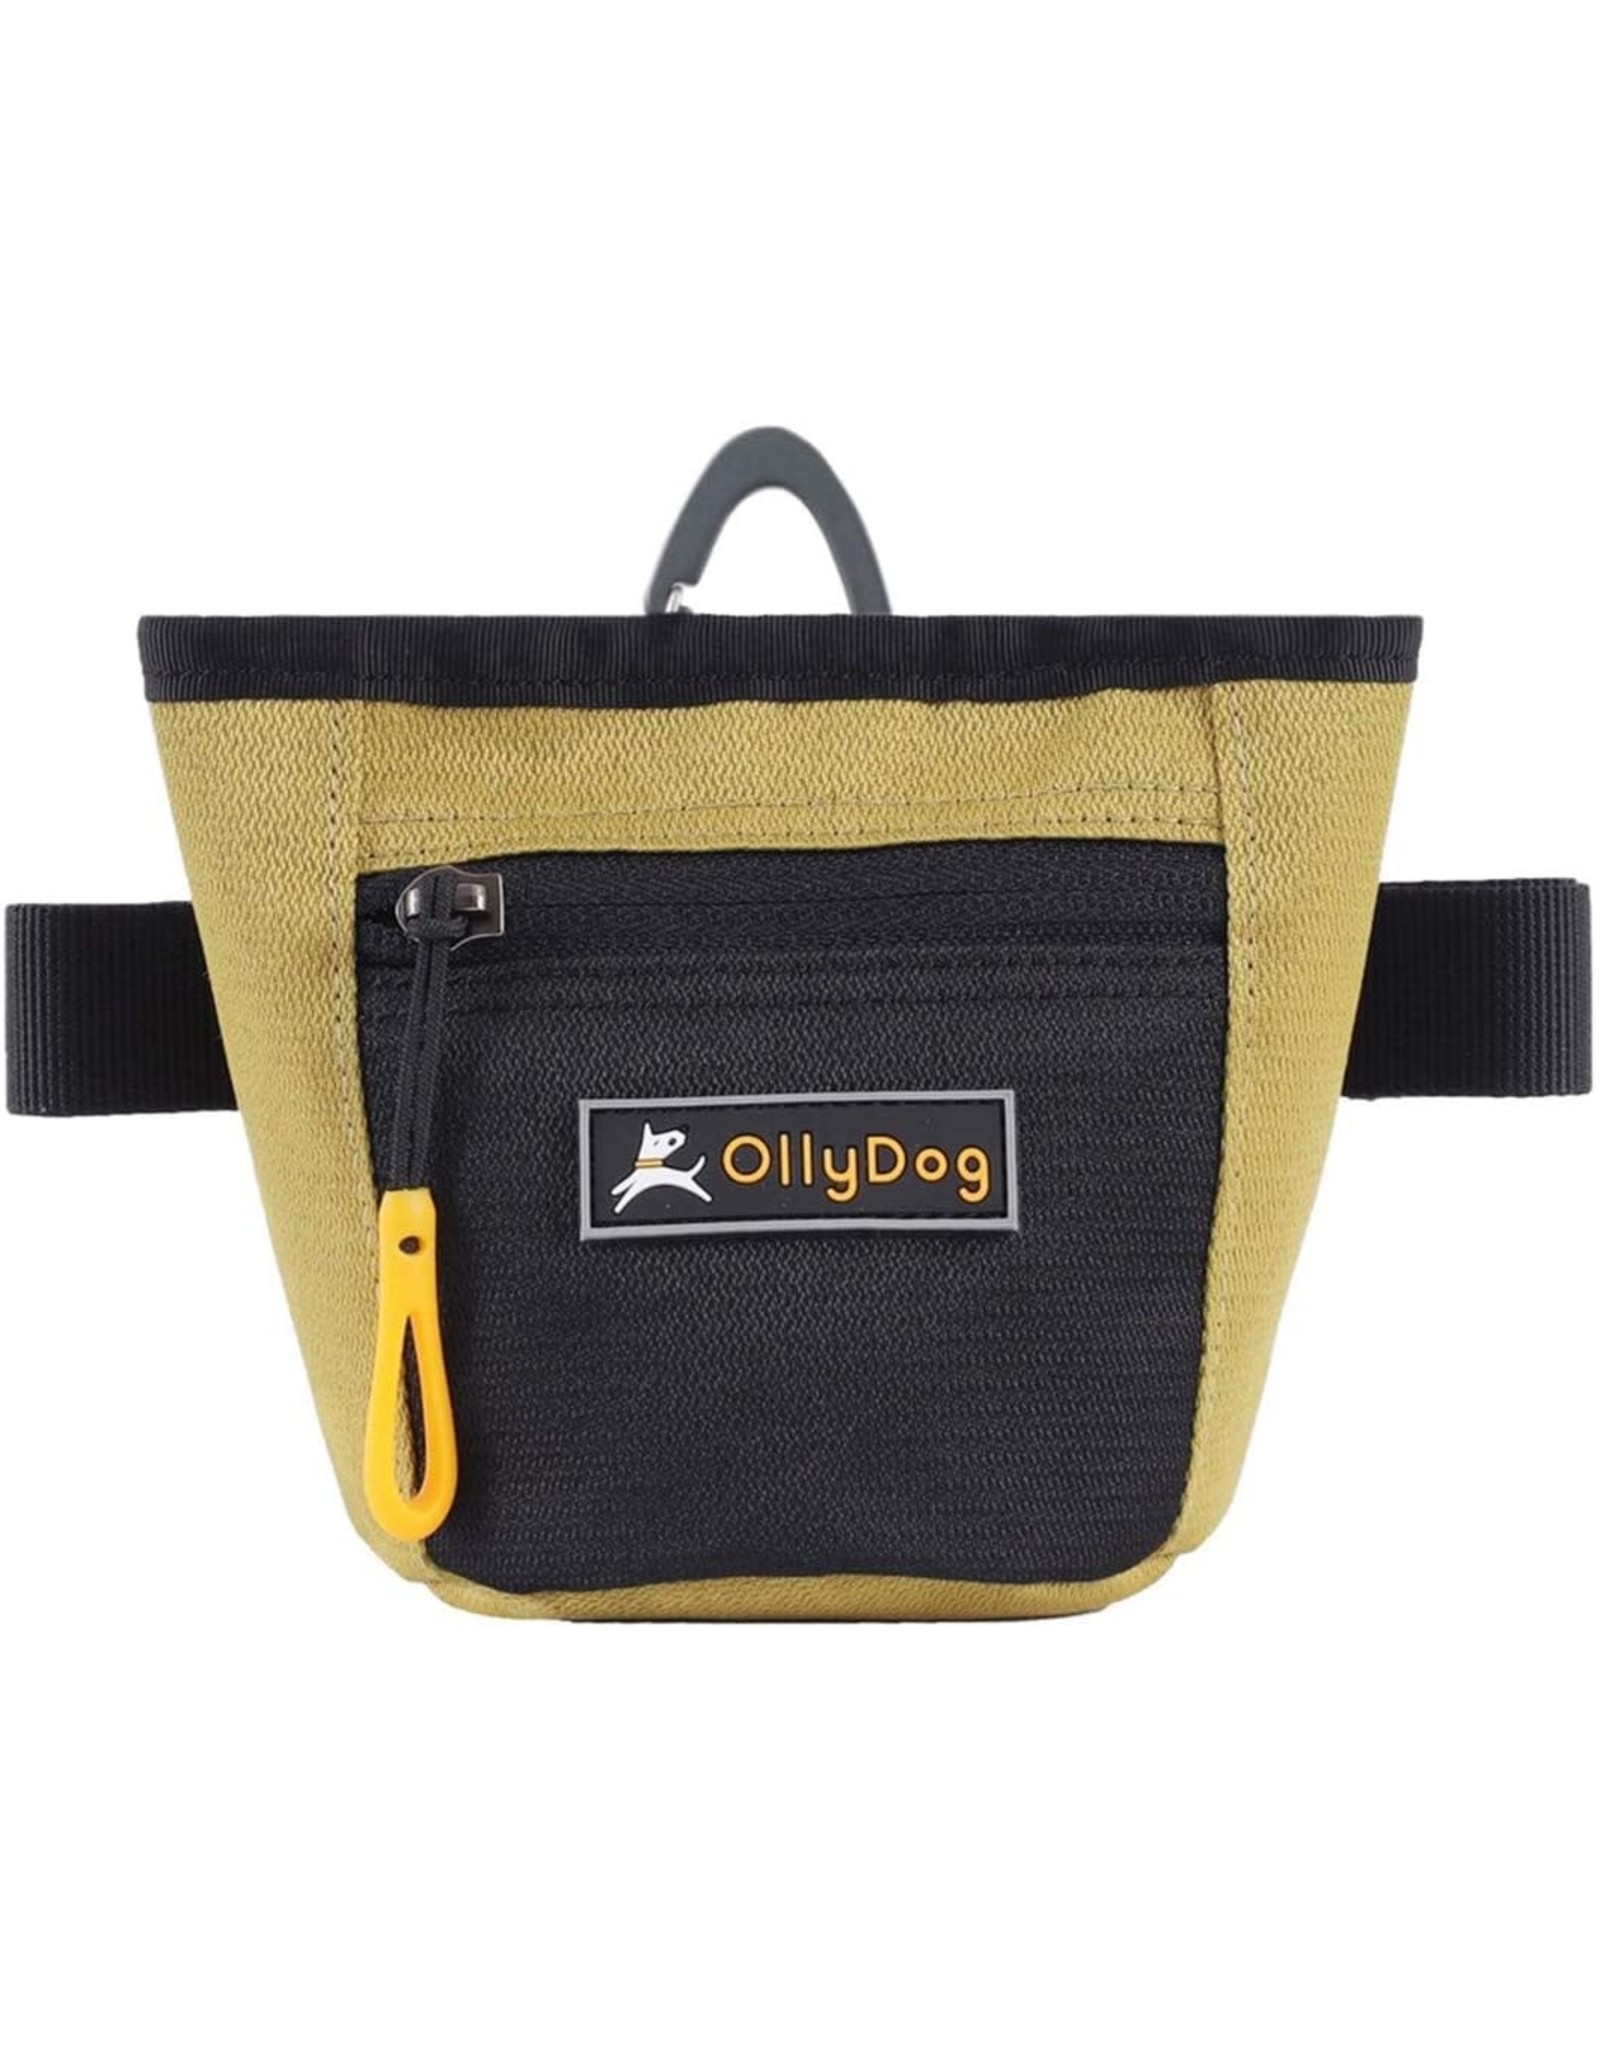 OllyDog Goodie Treat Bag: Amber Green, os